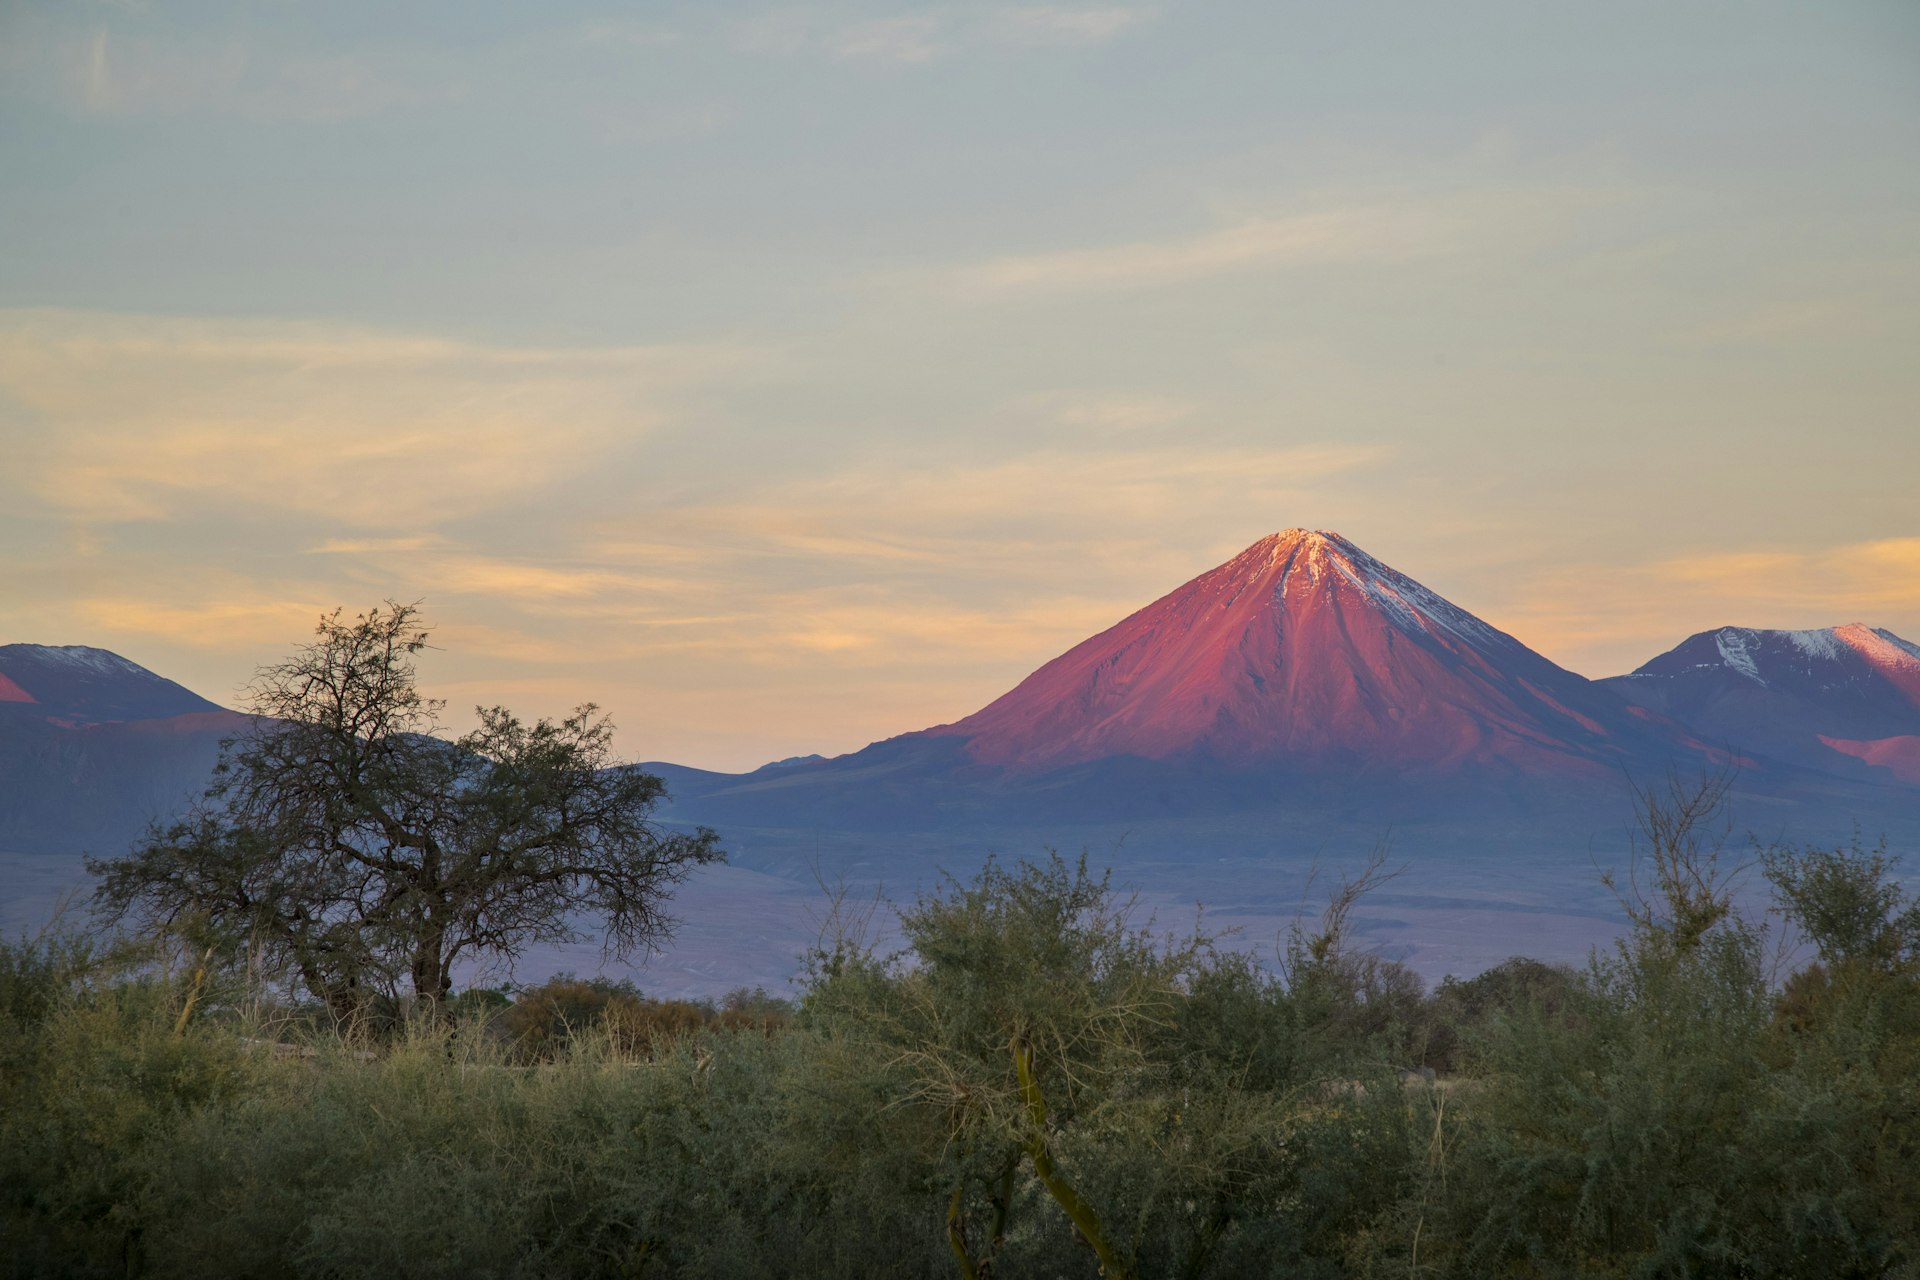 A perfectly triangular mountain peak reflects the setting sun